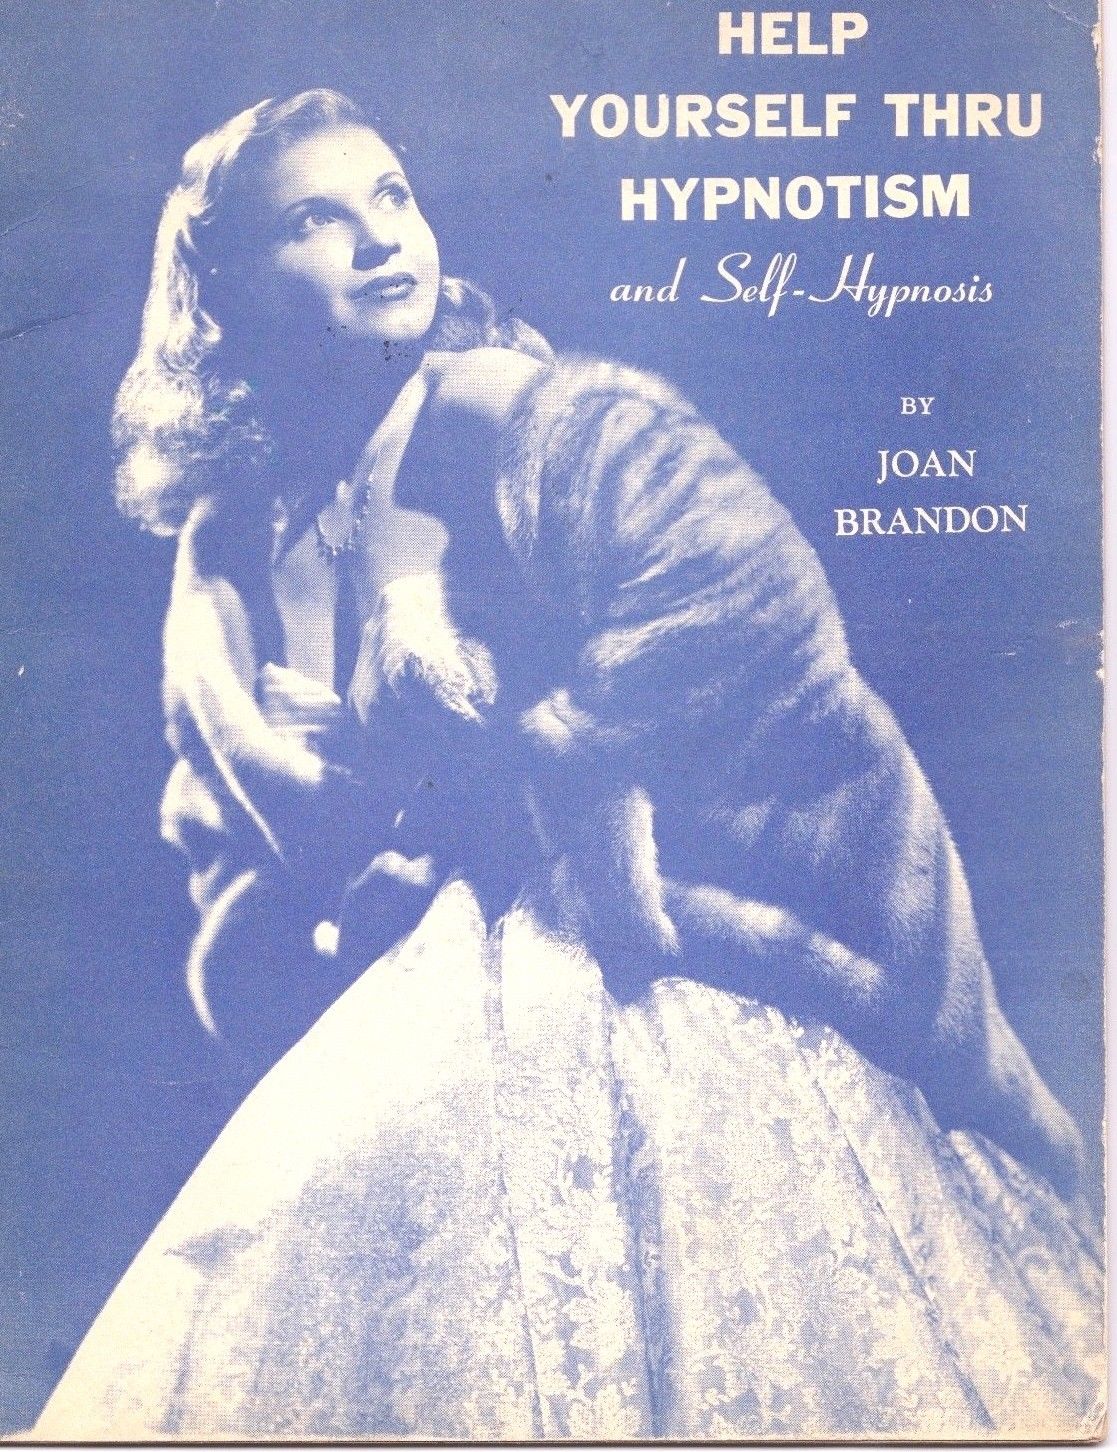 JoanBrandonSelfHypnosis